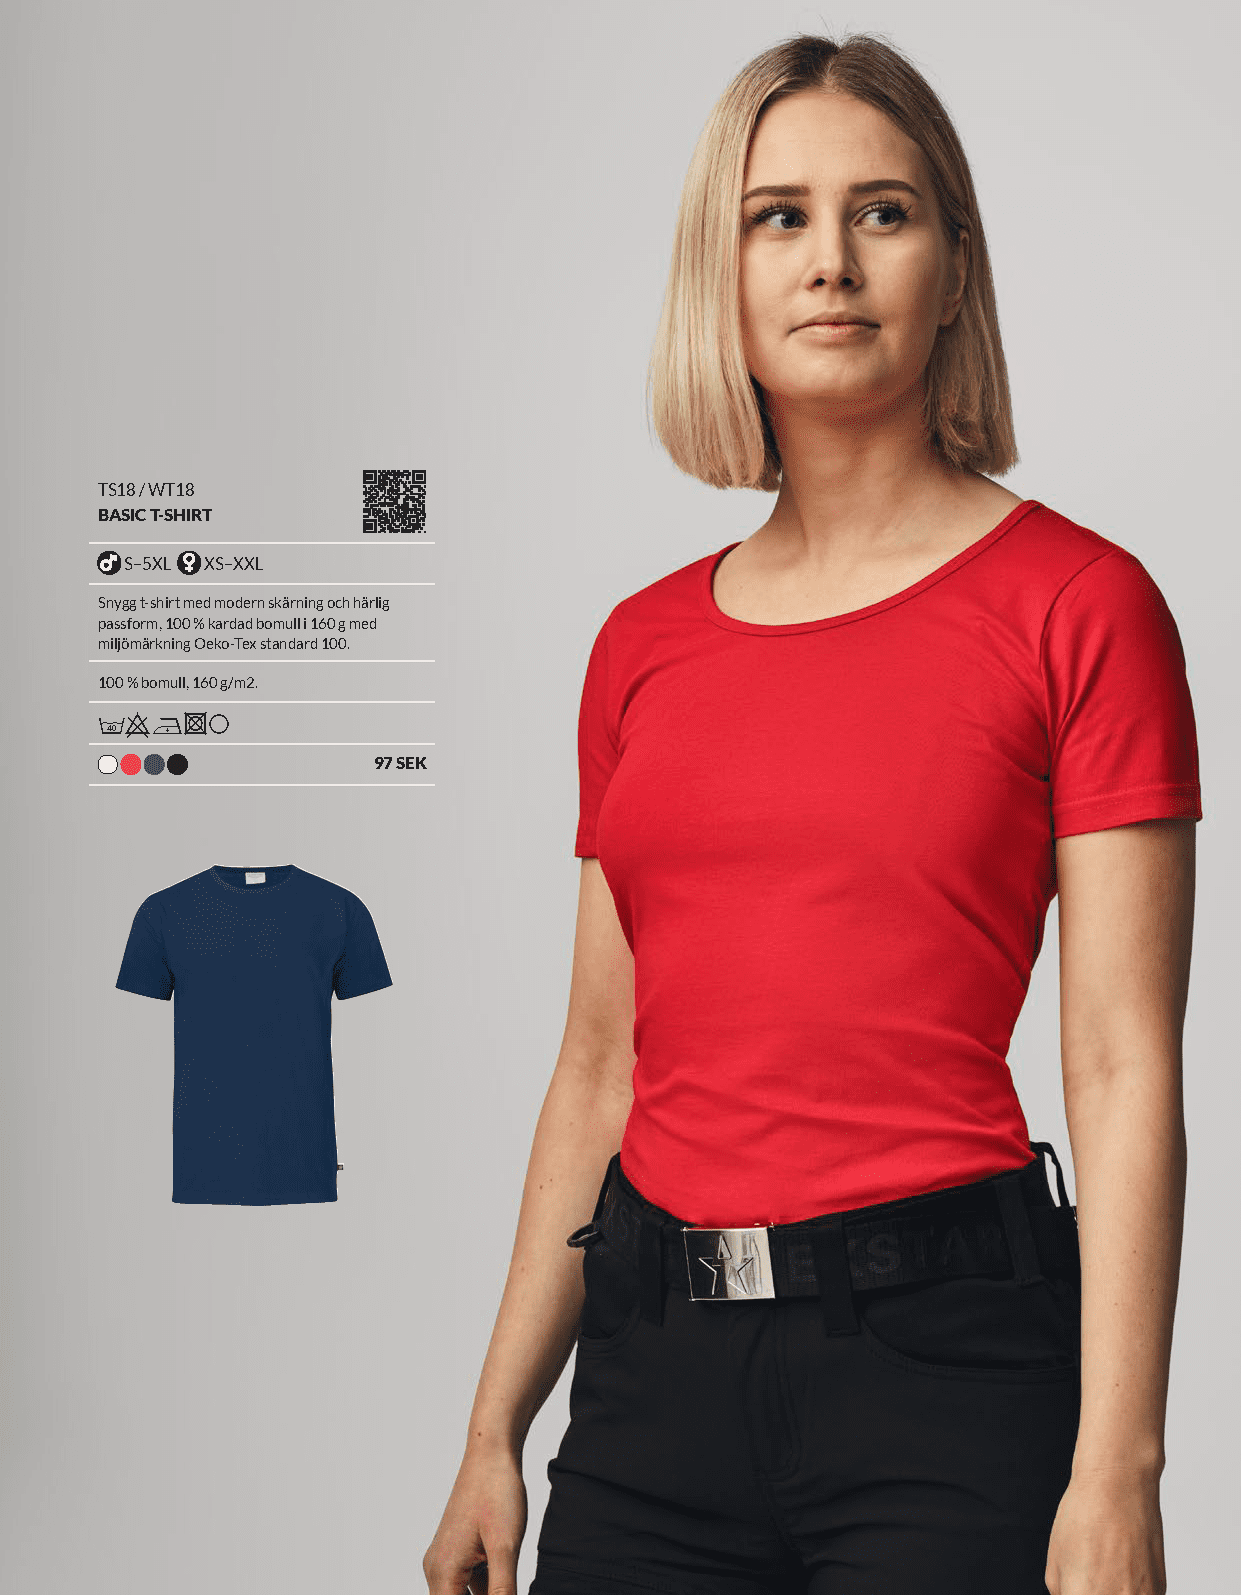 T-Shirts - Lindströms Reklam och Profil